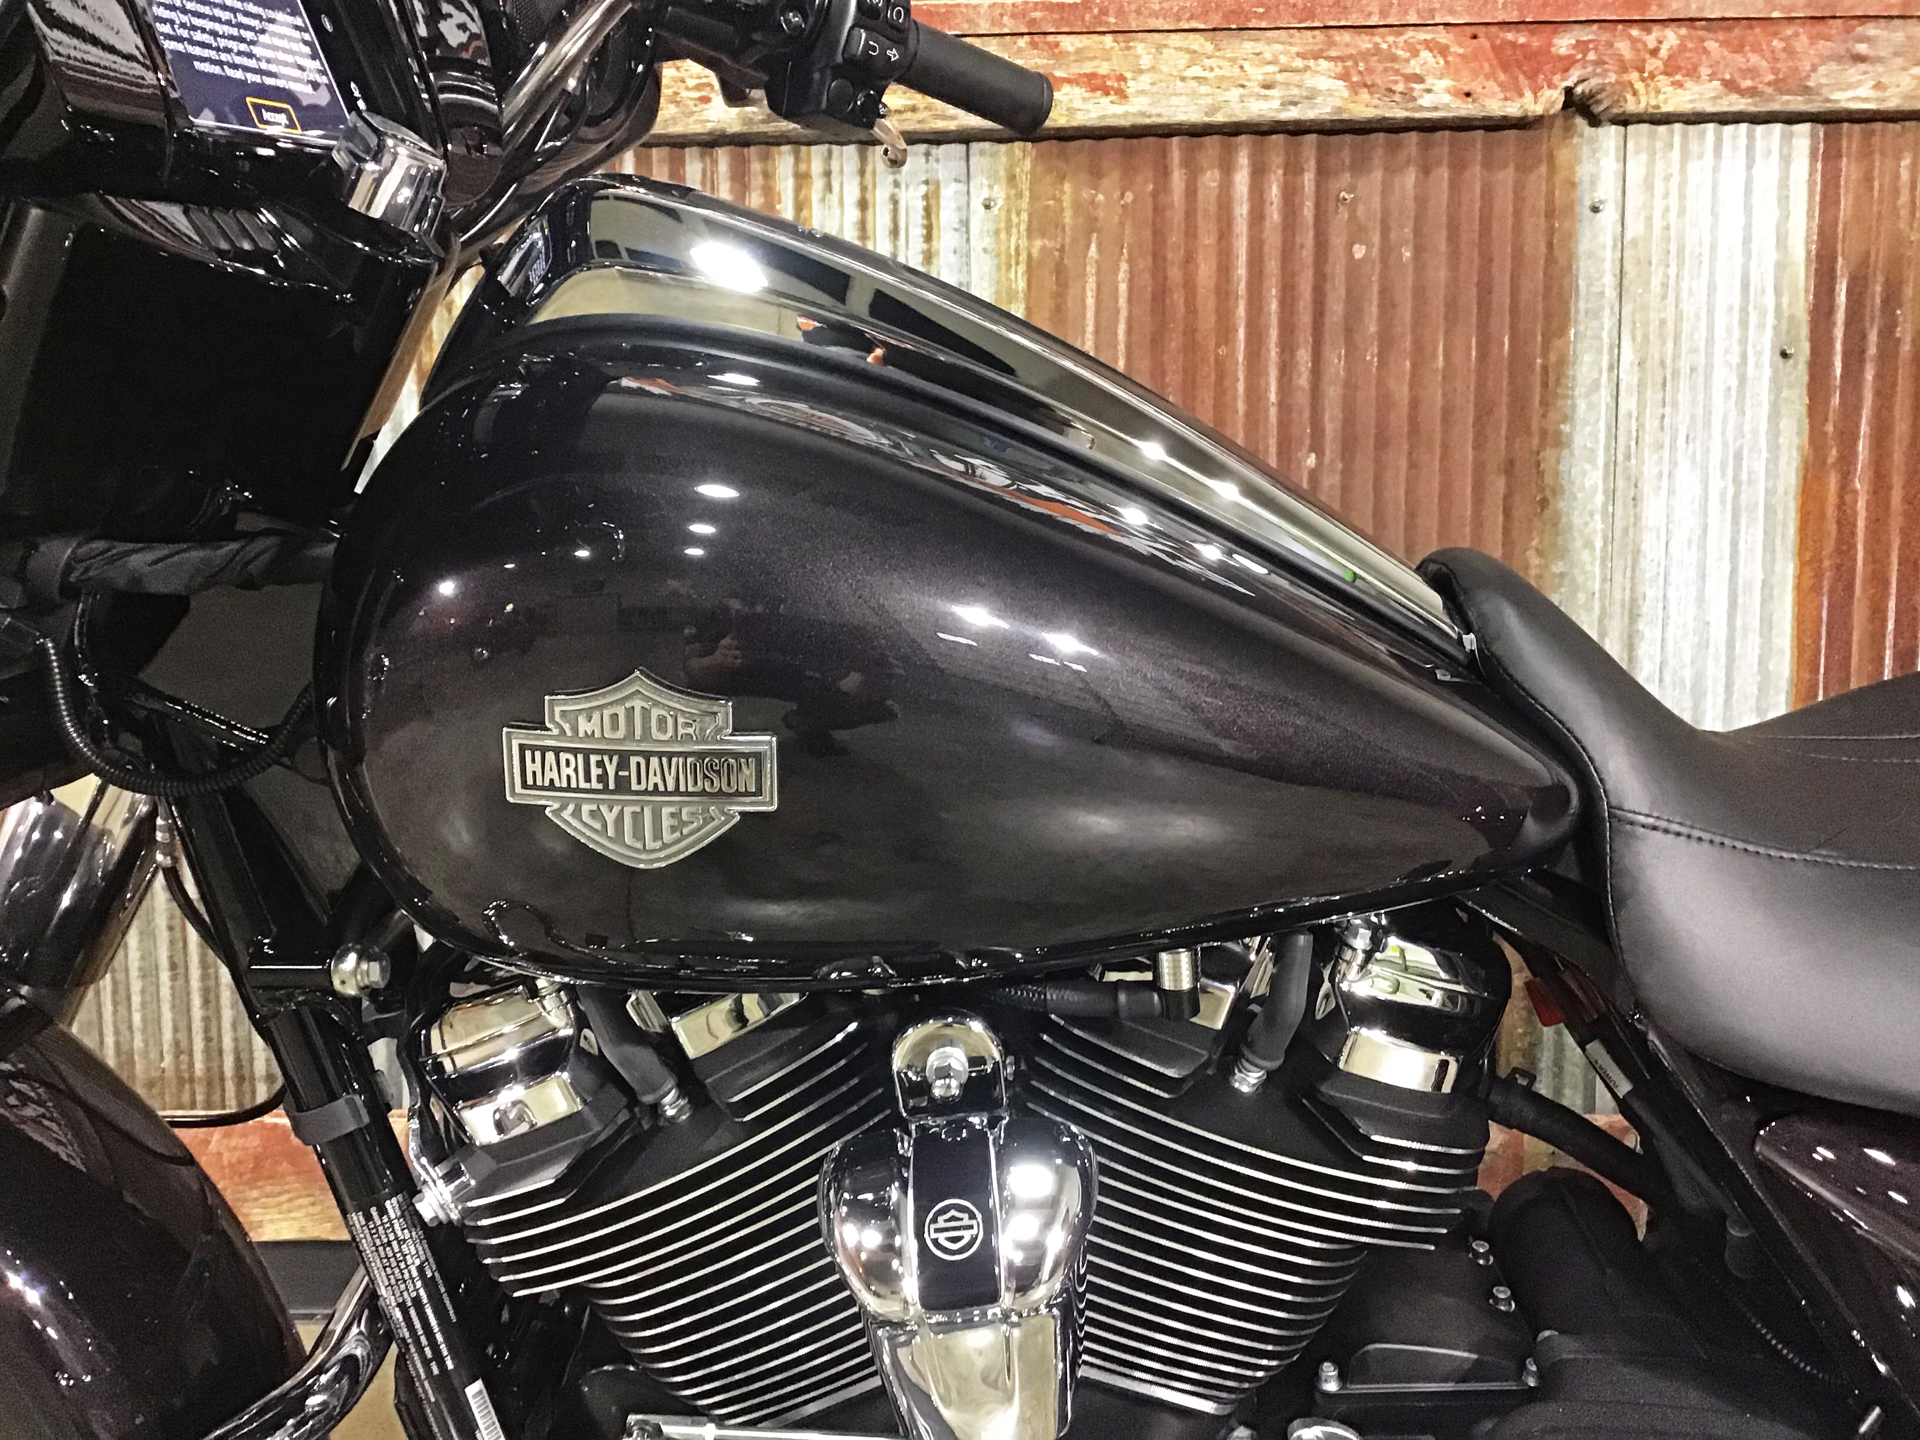 New 2021 Harley Davidson Street Glide Special Black Jack Metallic Chrome Option Motorcycles In Chippewa Falls Wi Fl654121